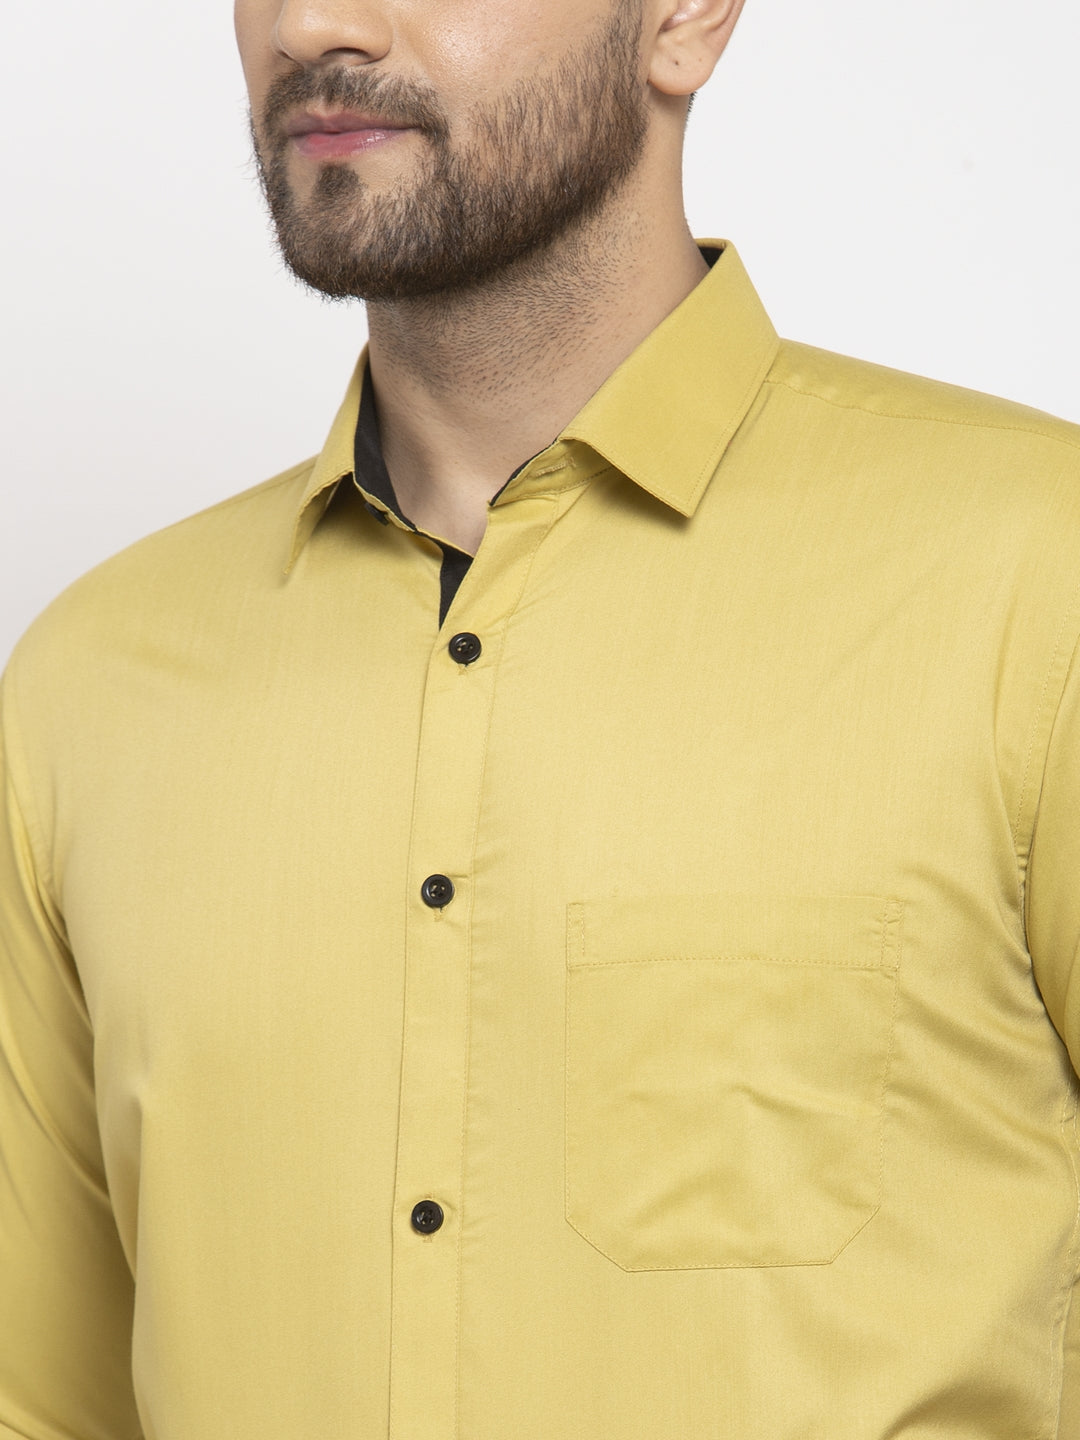 Men's  Lime Yellow Formal Shirt with black detailing ( SF 411Lime ) - Jainish